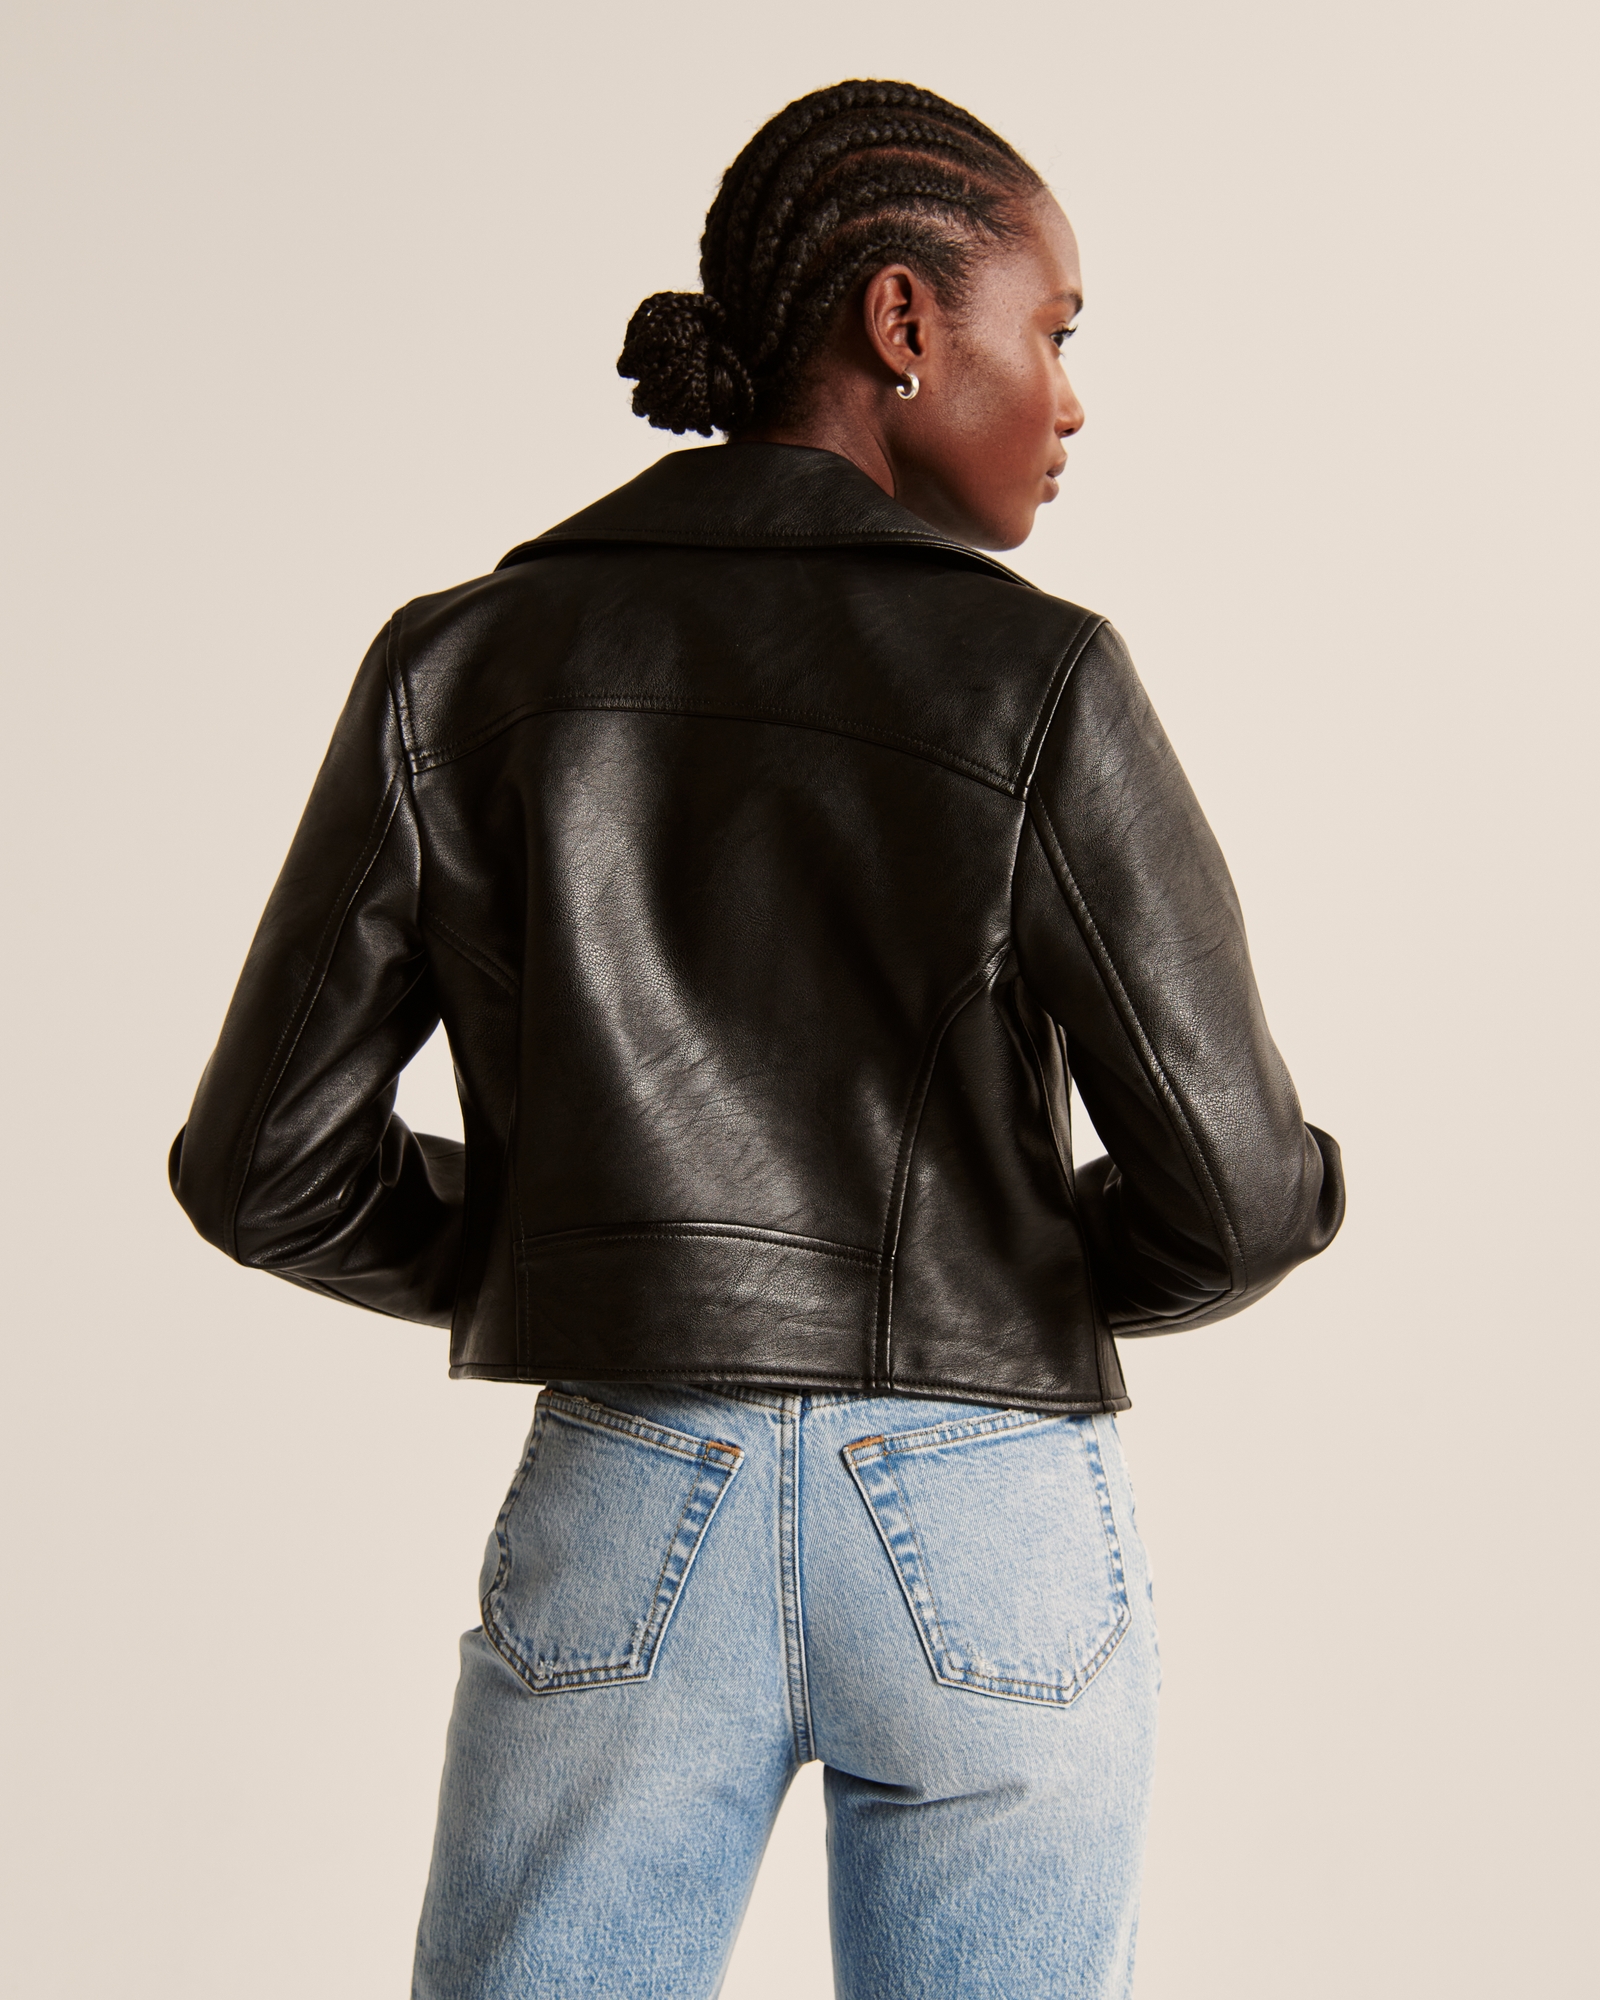 Women's Black Leather Biker Jacket, Navy and White Polka Dot